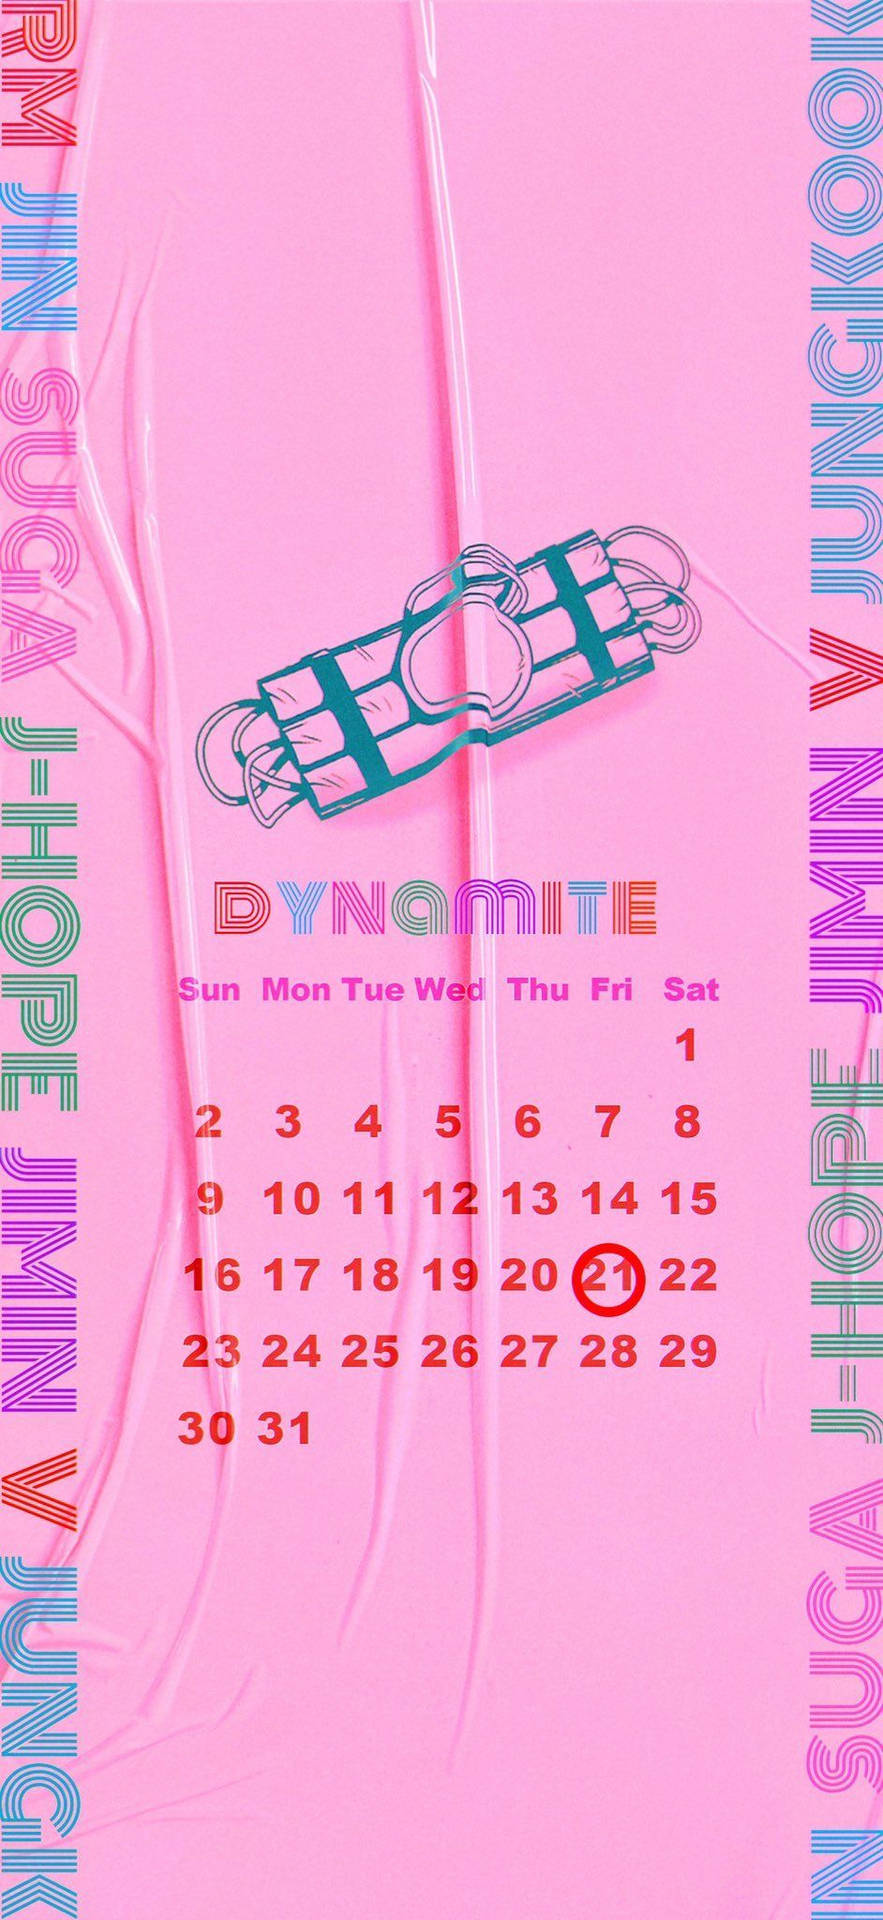 Bts Dynamite Release Date Calendar Wallpaper